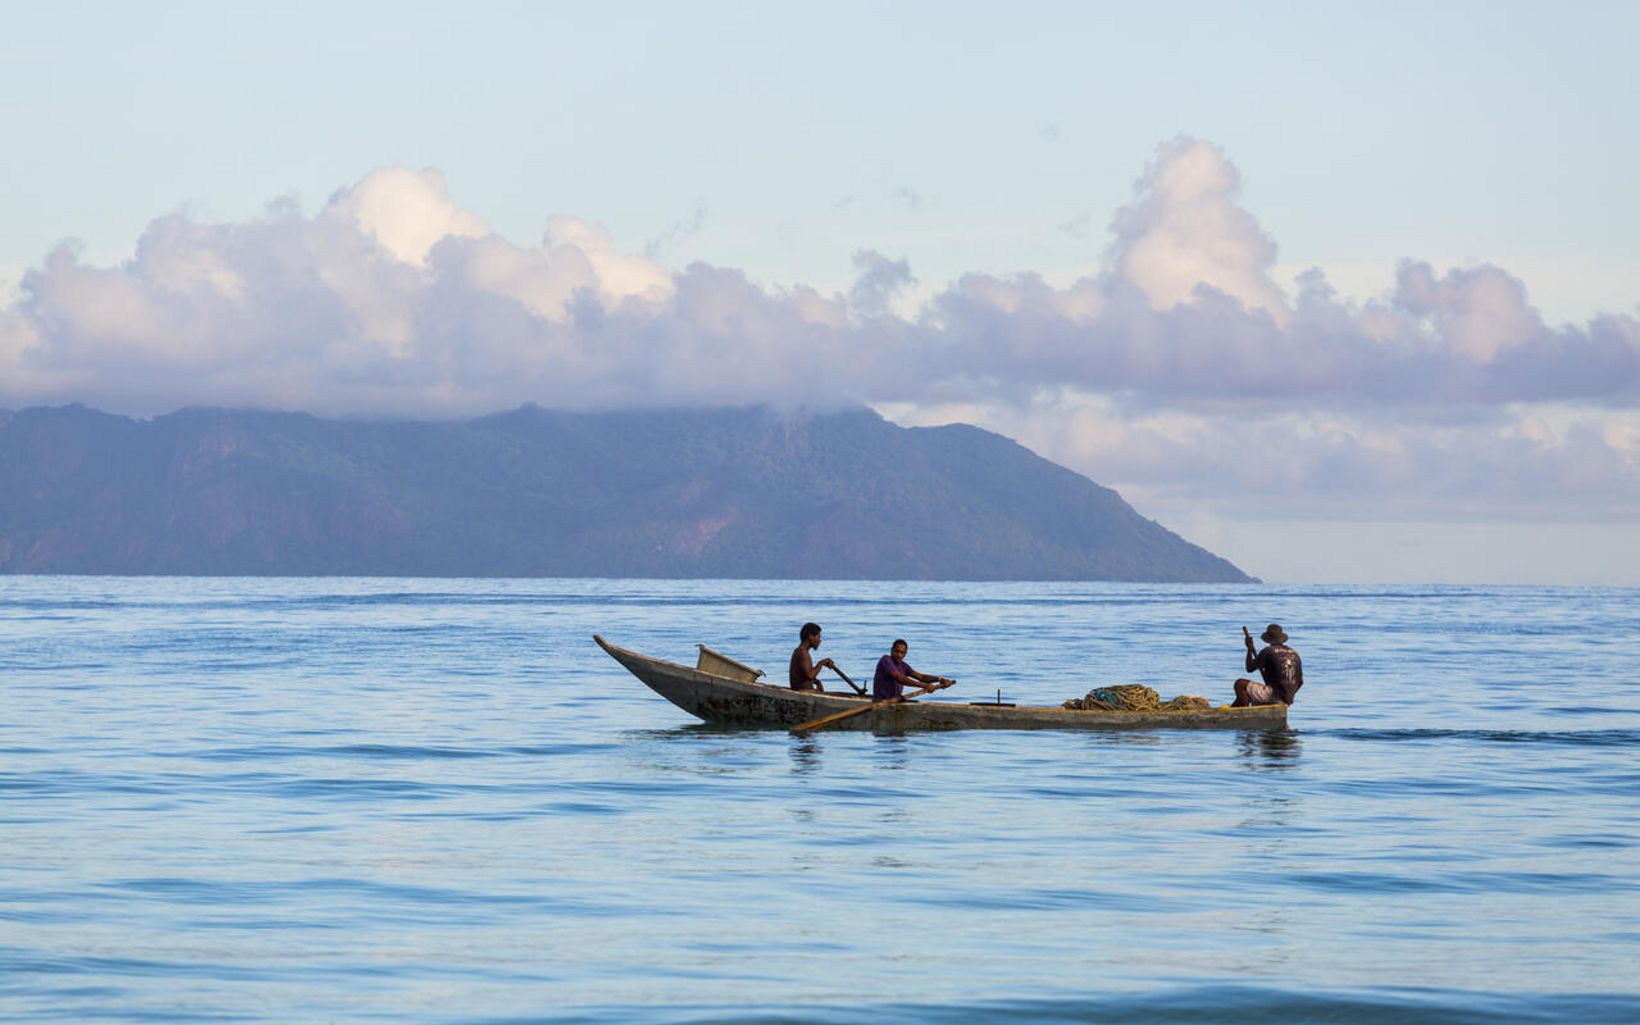 Same boat. Mackrel fishermen catching fish off the shore in Seychelles. © Jason Houston 